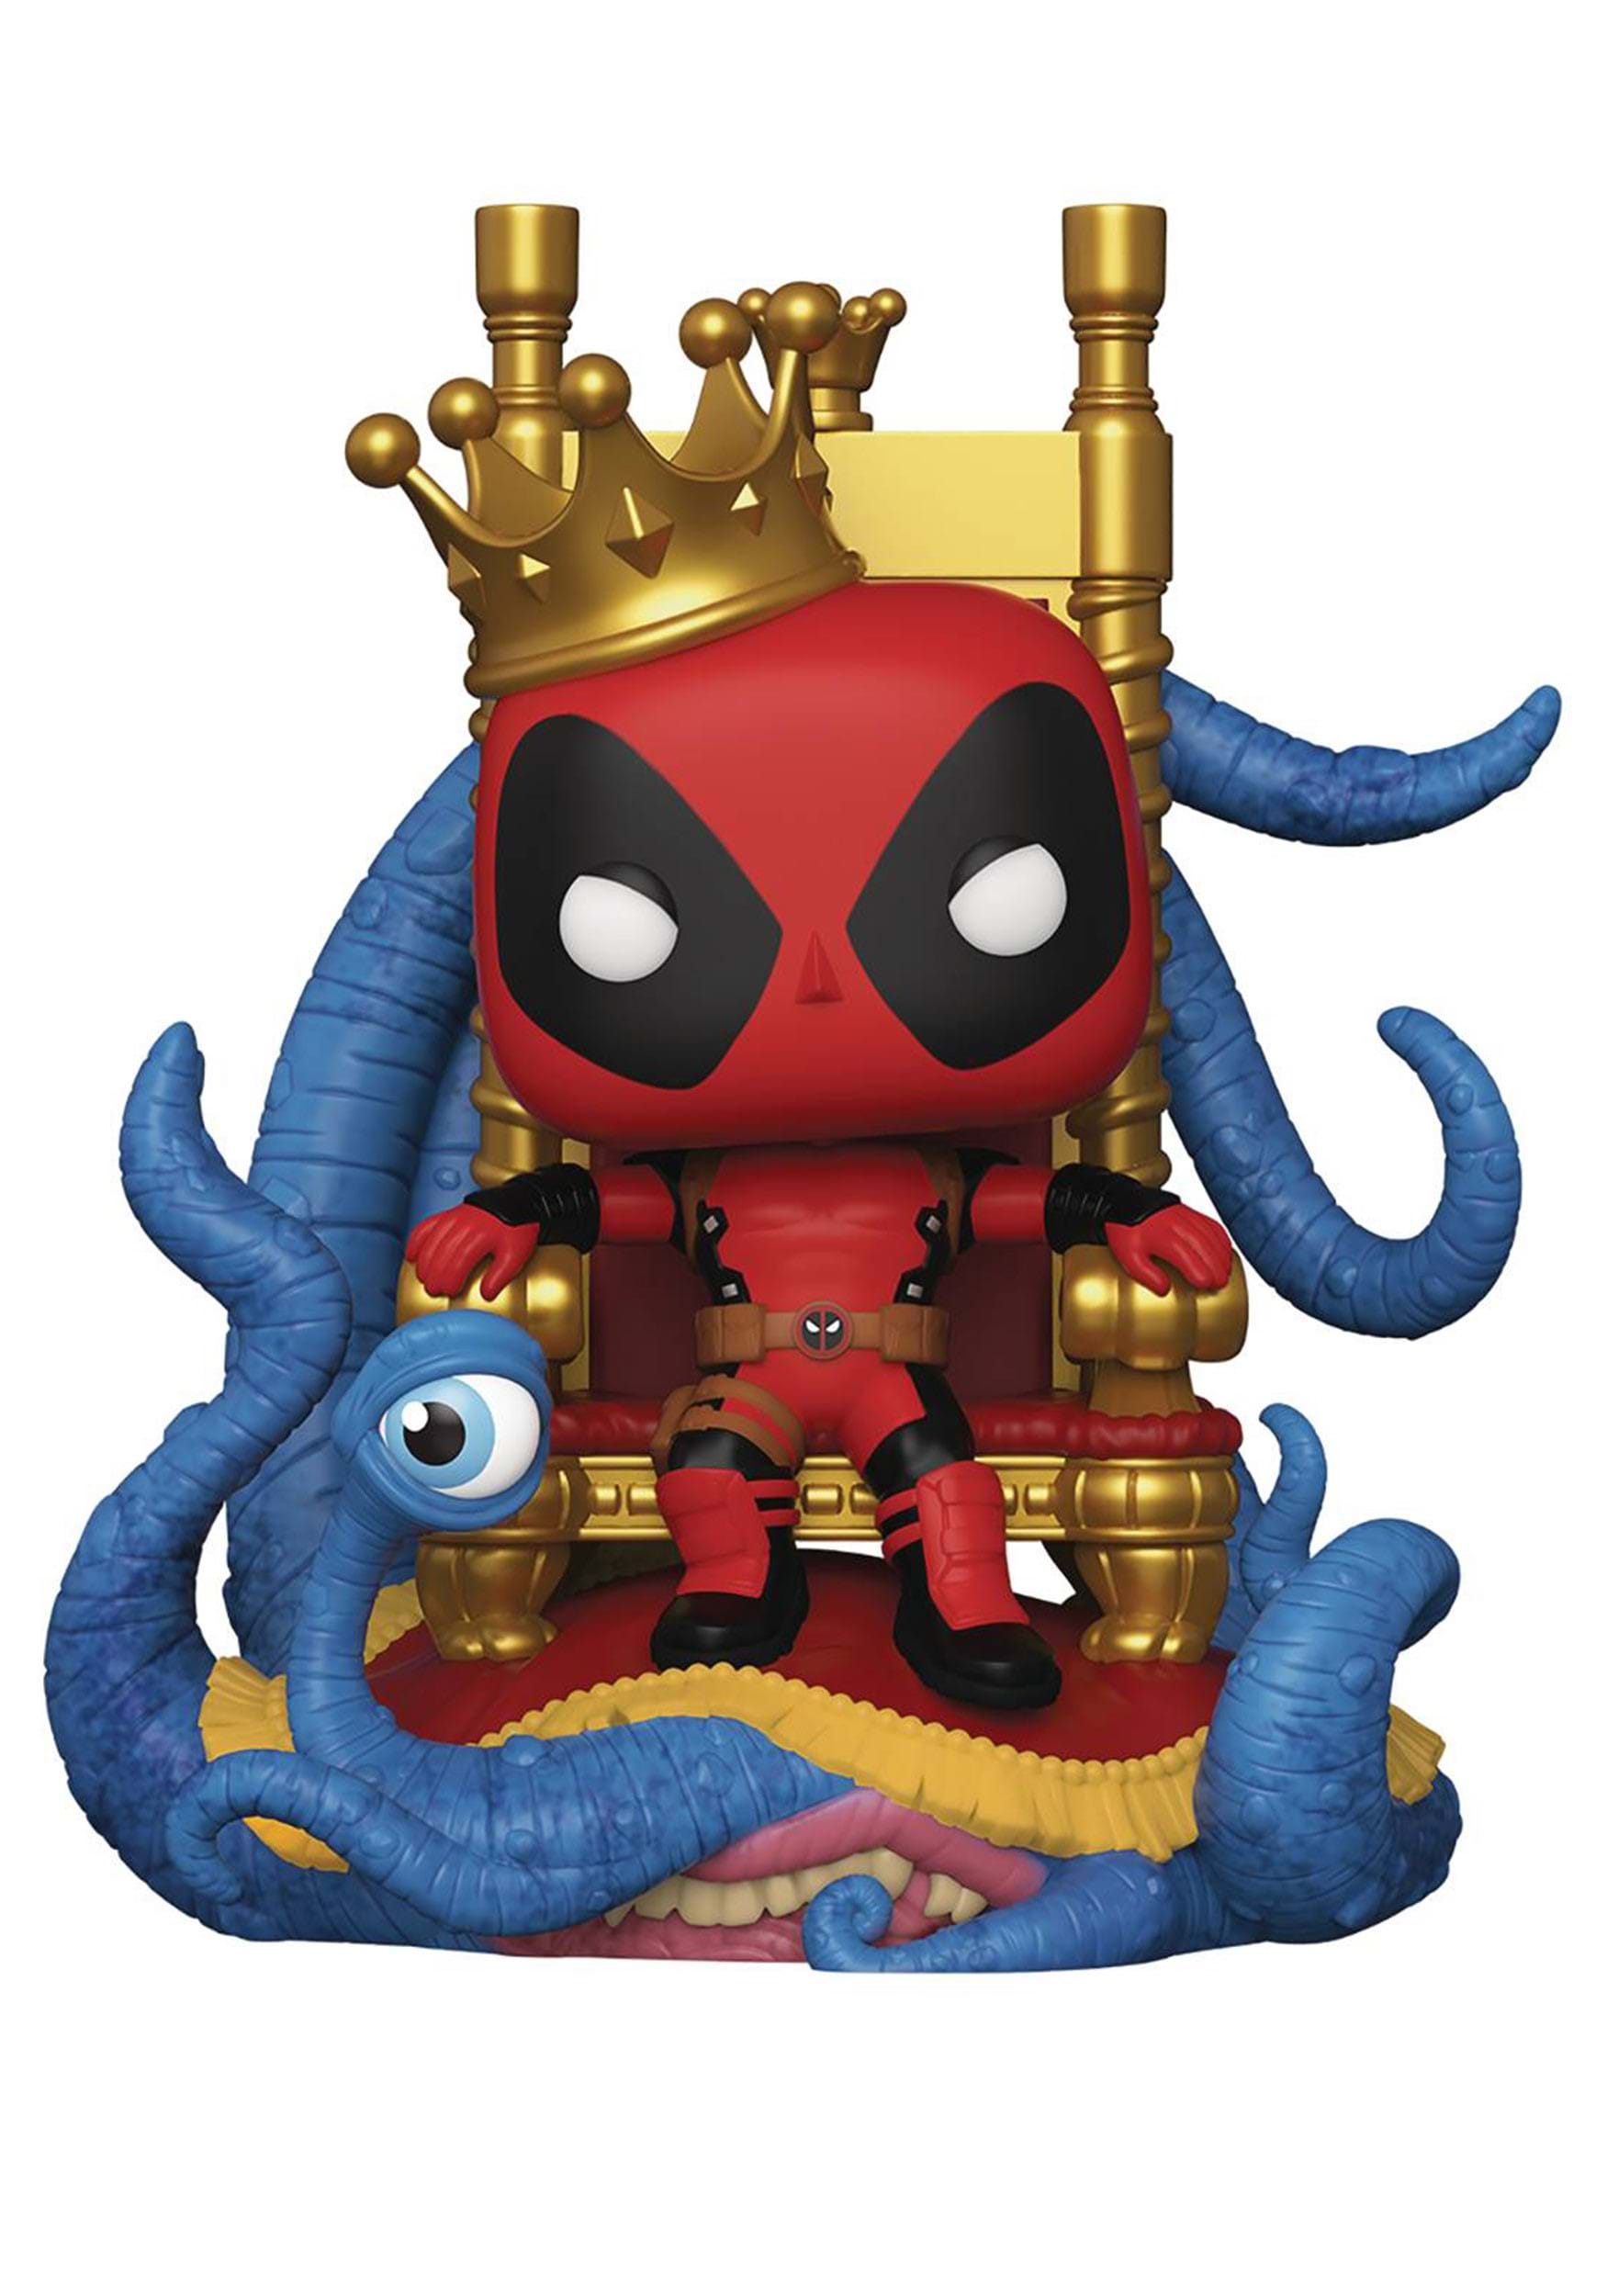 Funko Pop! Deluxe Marvel Heroes-King Deadpool on Throne Bobblehead Figure